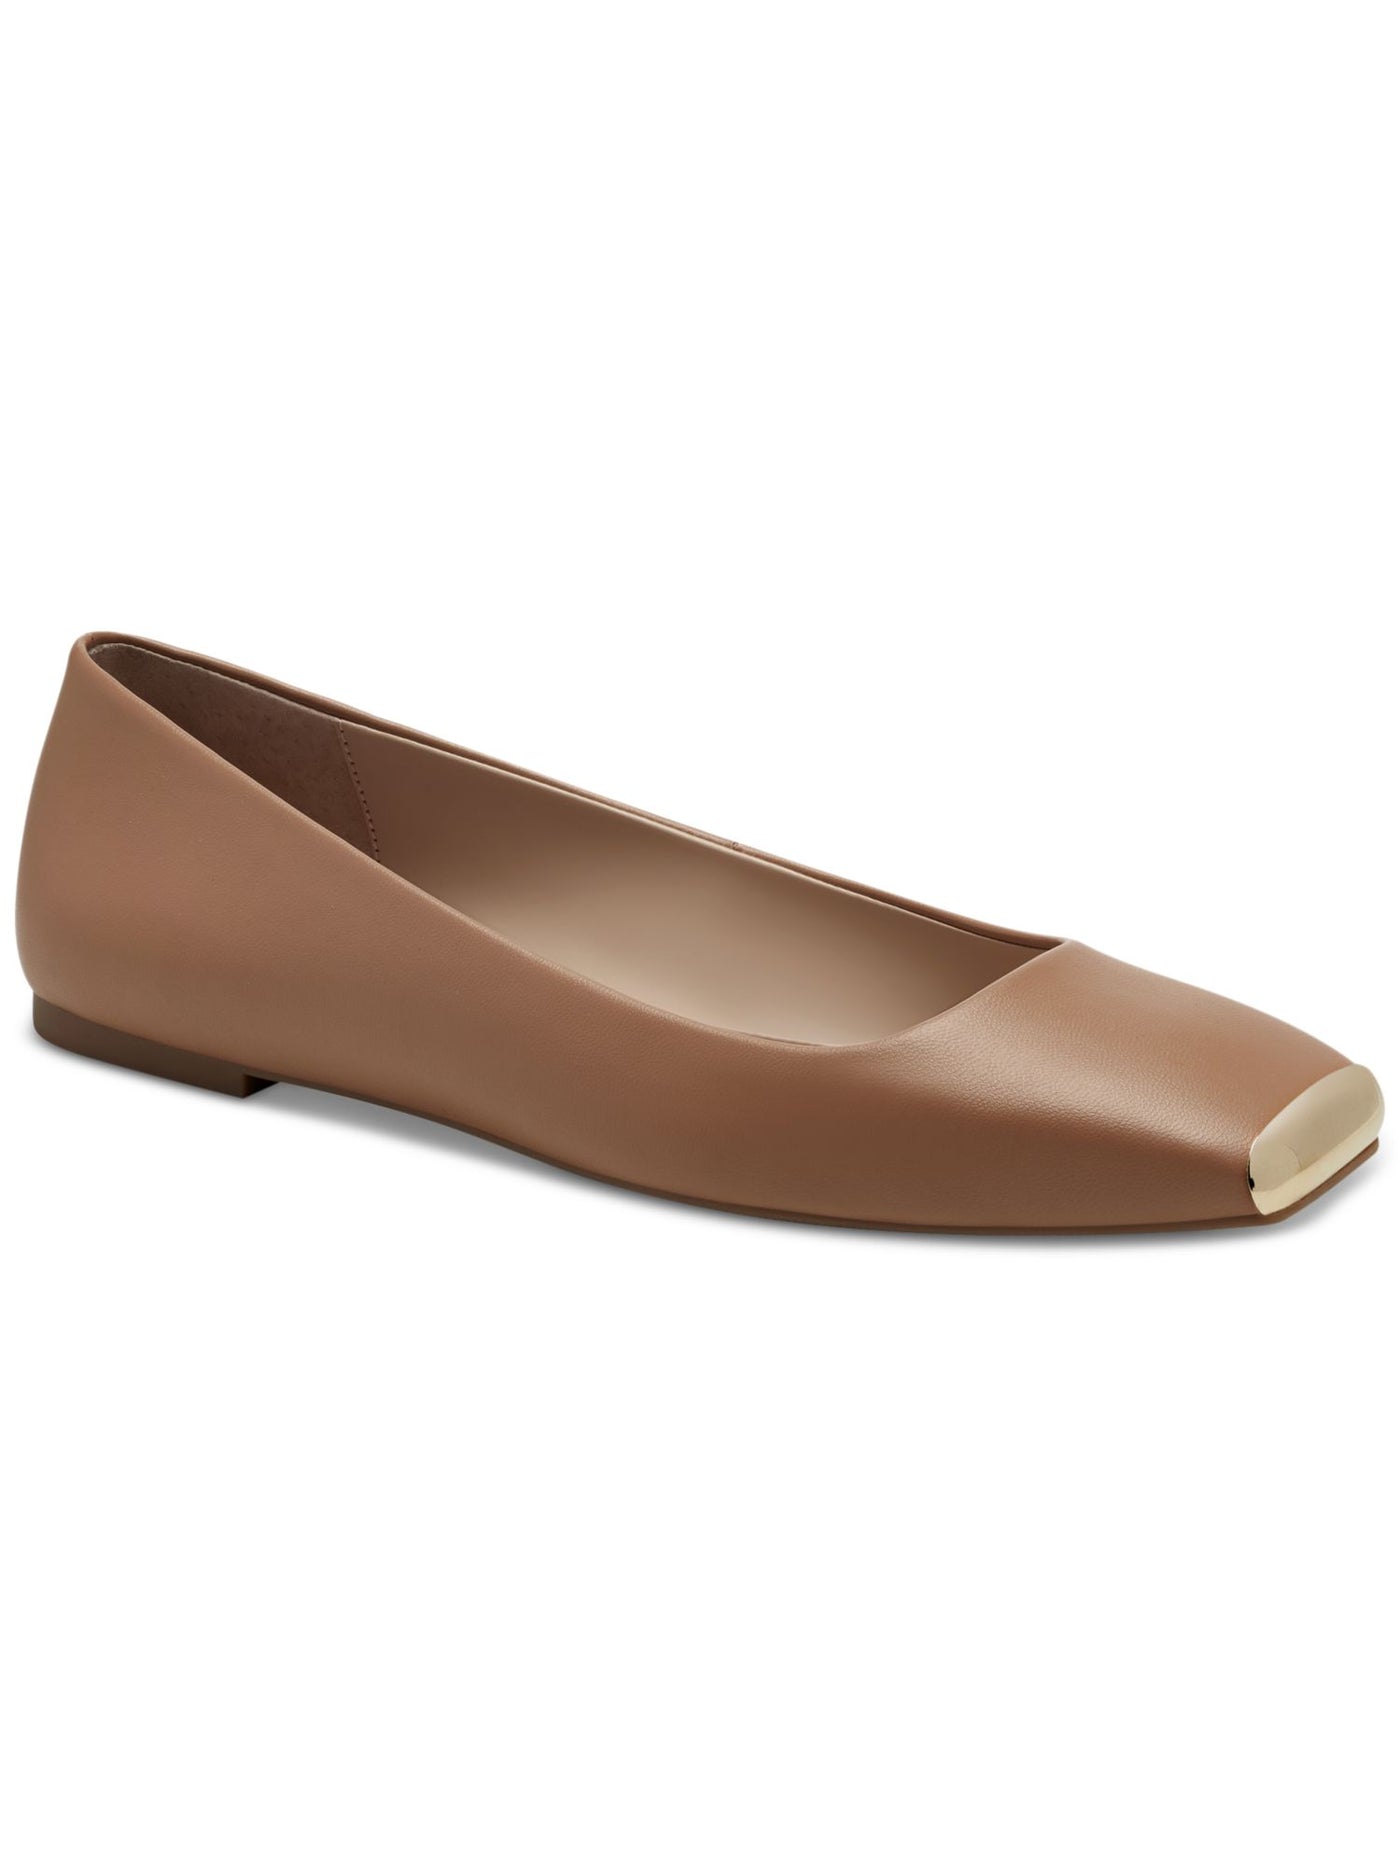 ALFANI Womens Brown Flexible Sole Padded Metallic Neptoon Square Toe Block Heel Slip On Flats Shoes 9 M